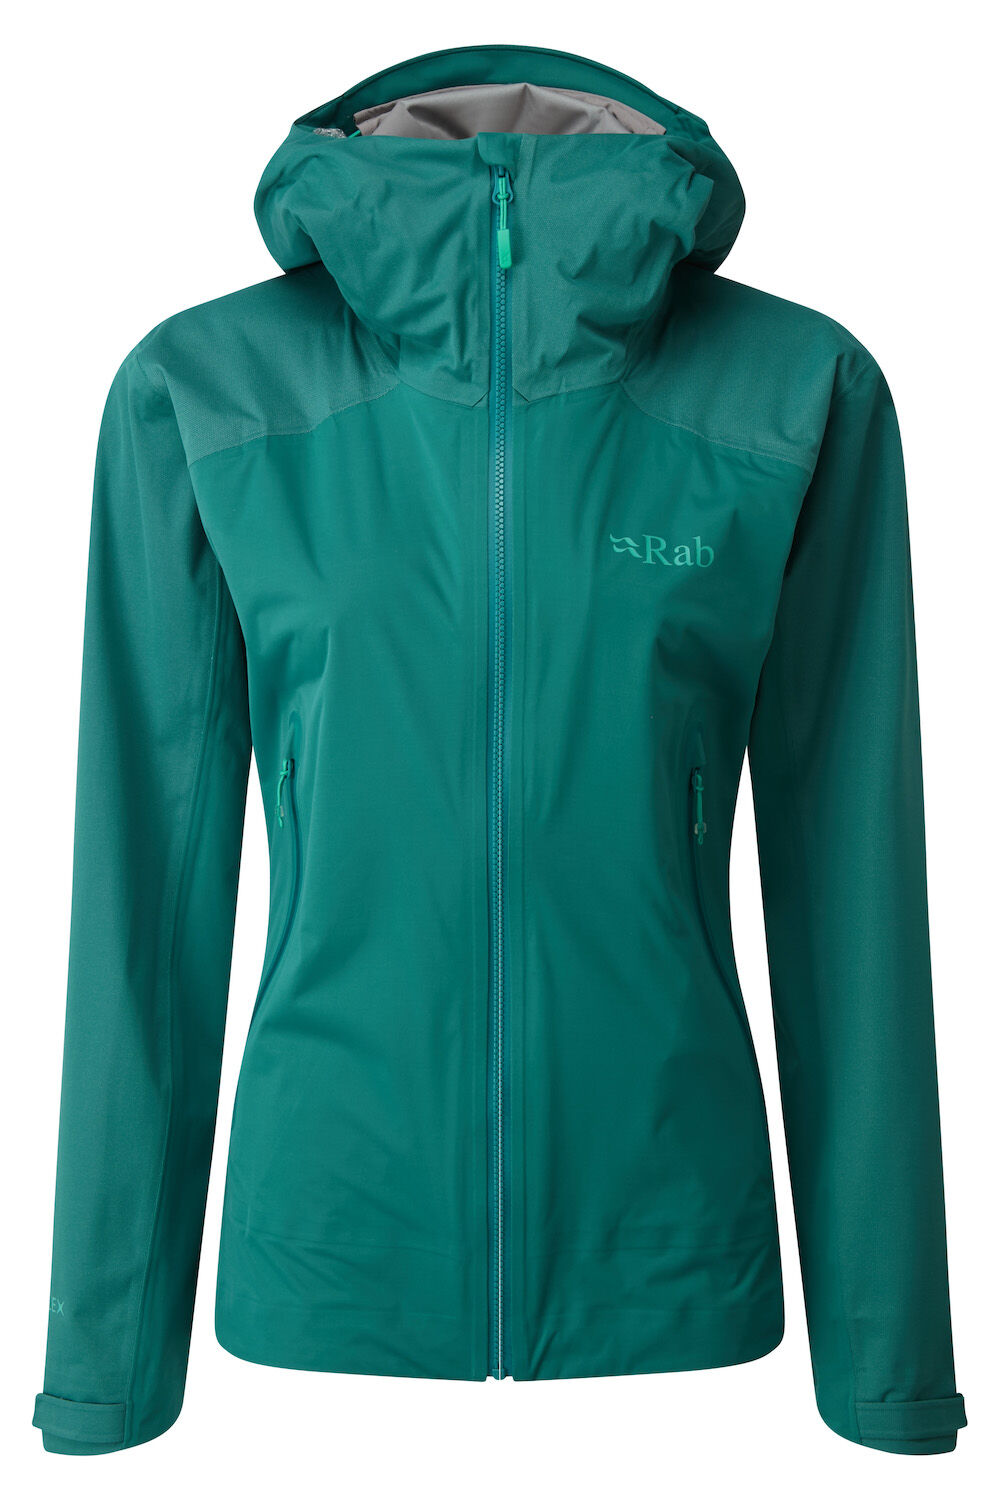 Rab - Kinetic Alpine Jacket - Chaqueta impermeable - Mujer